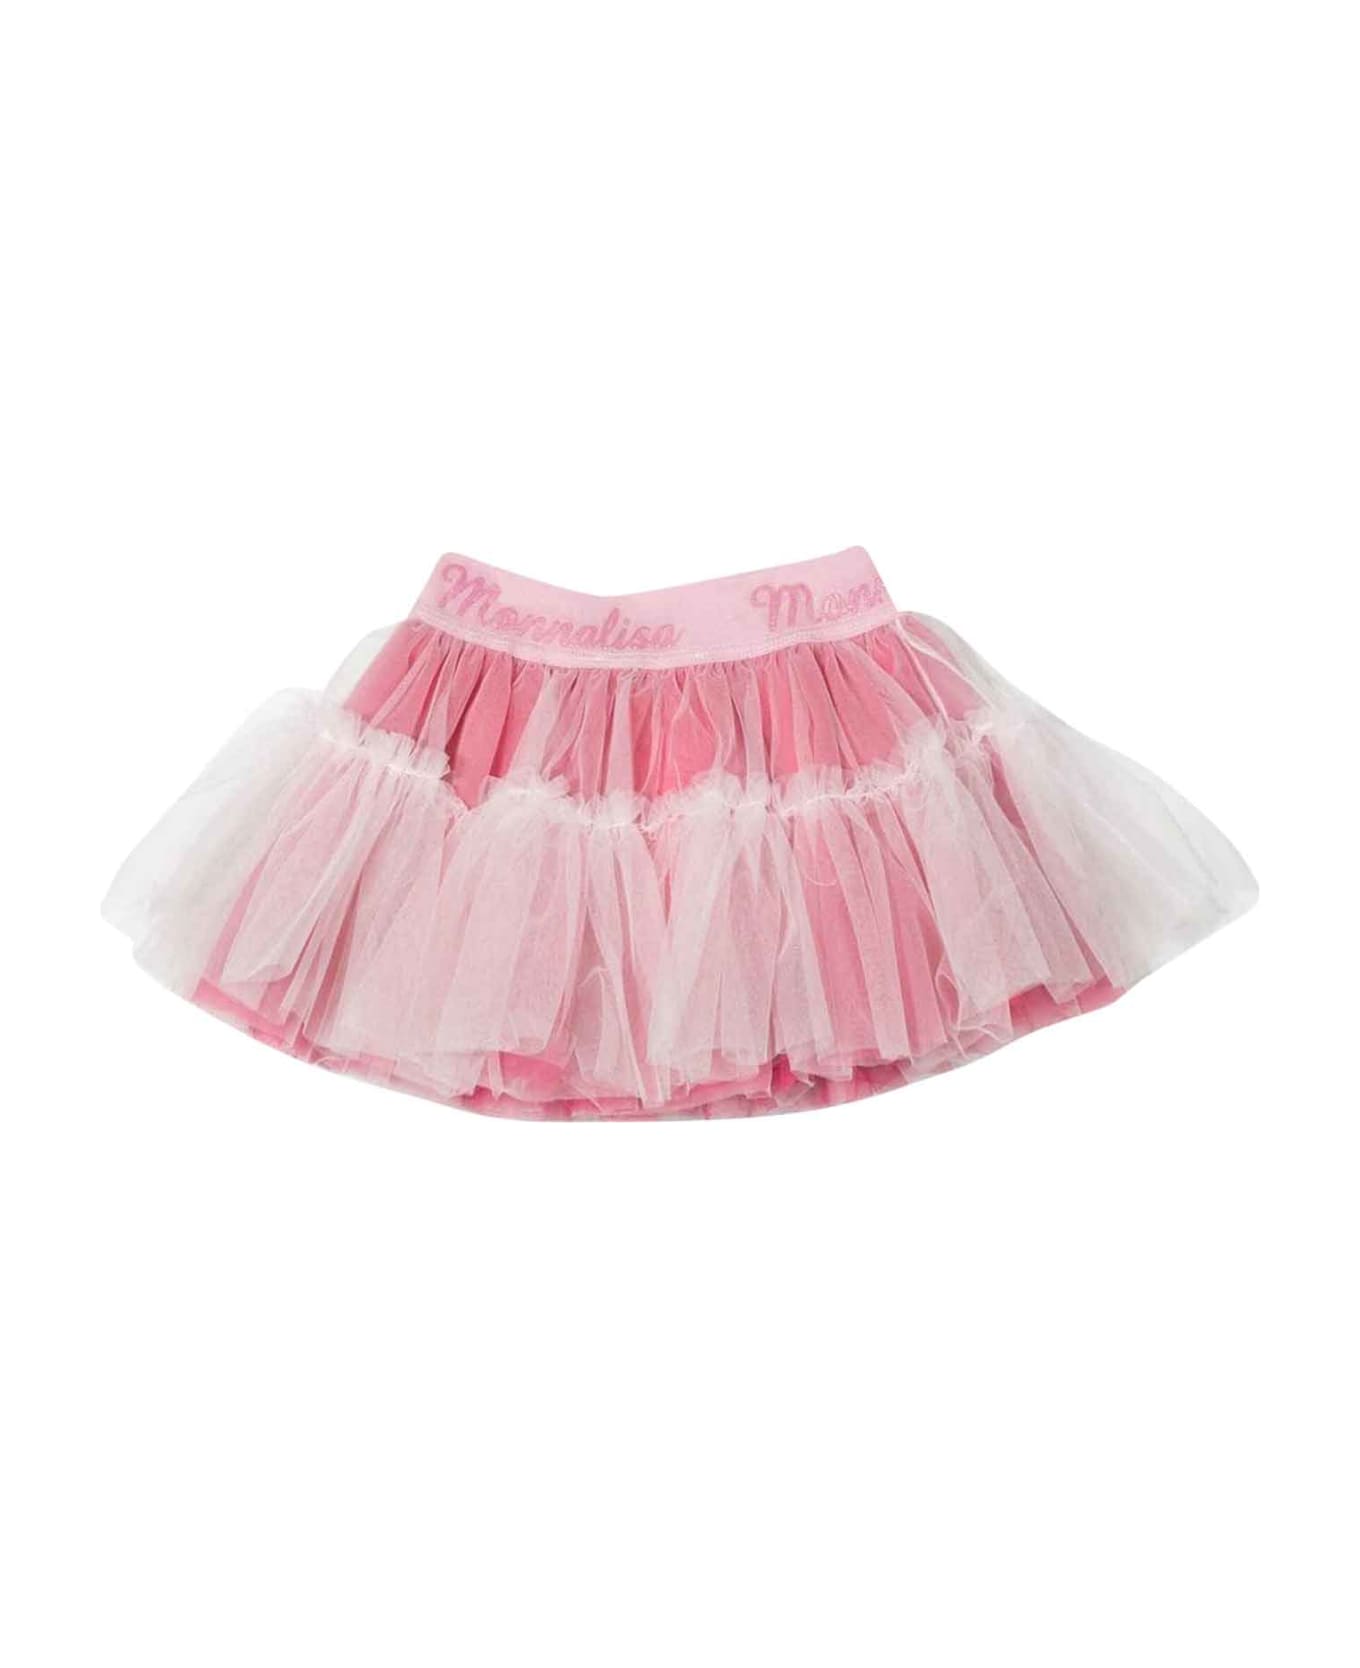 Monnalisa Pink Skirt Baby Girl - Rosa